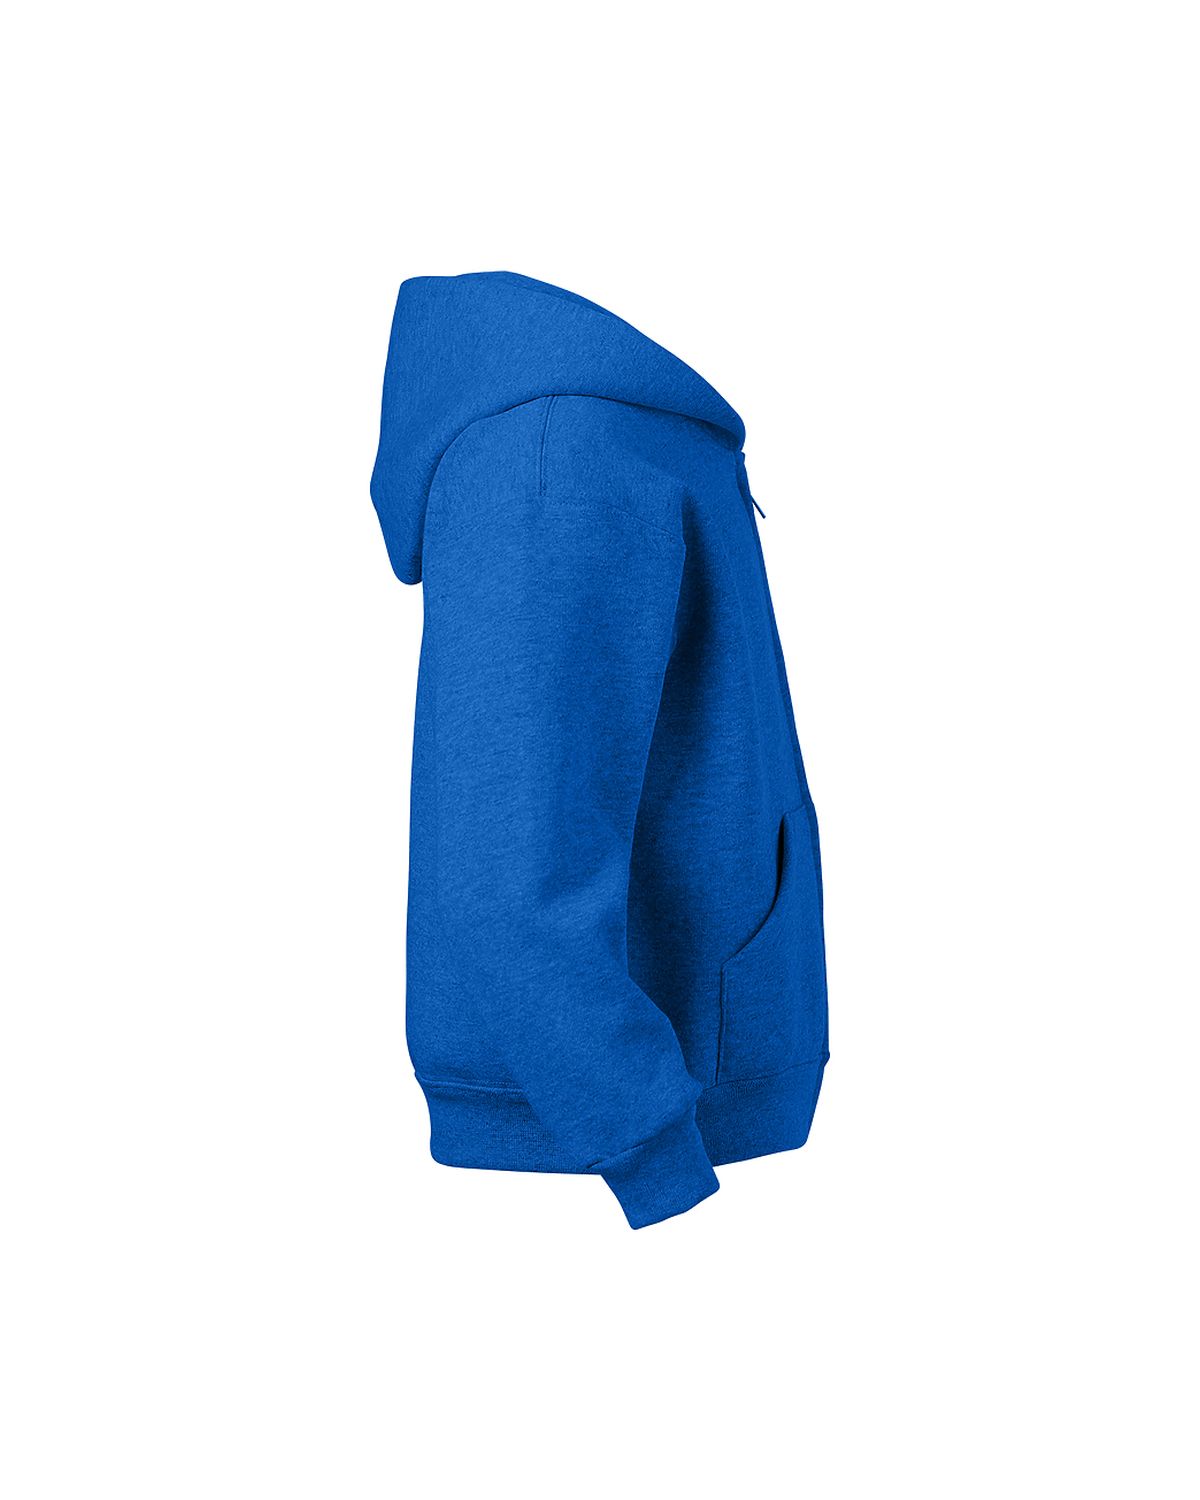 'Soffe J9078 Juvenile Classic Zip Hooded Sweatshirt'